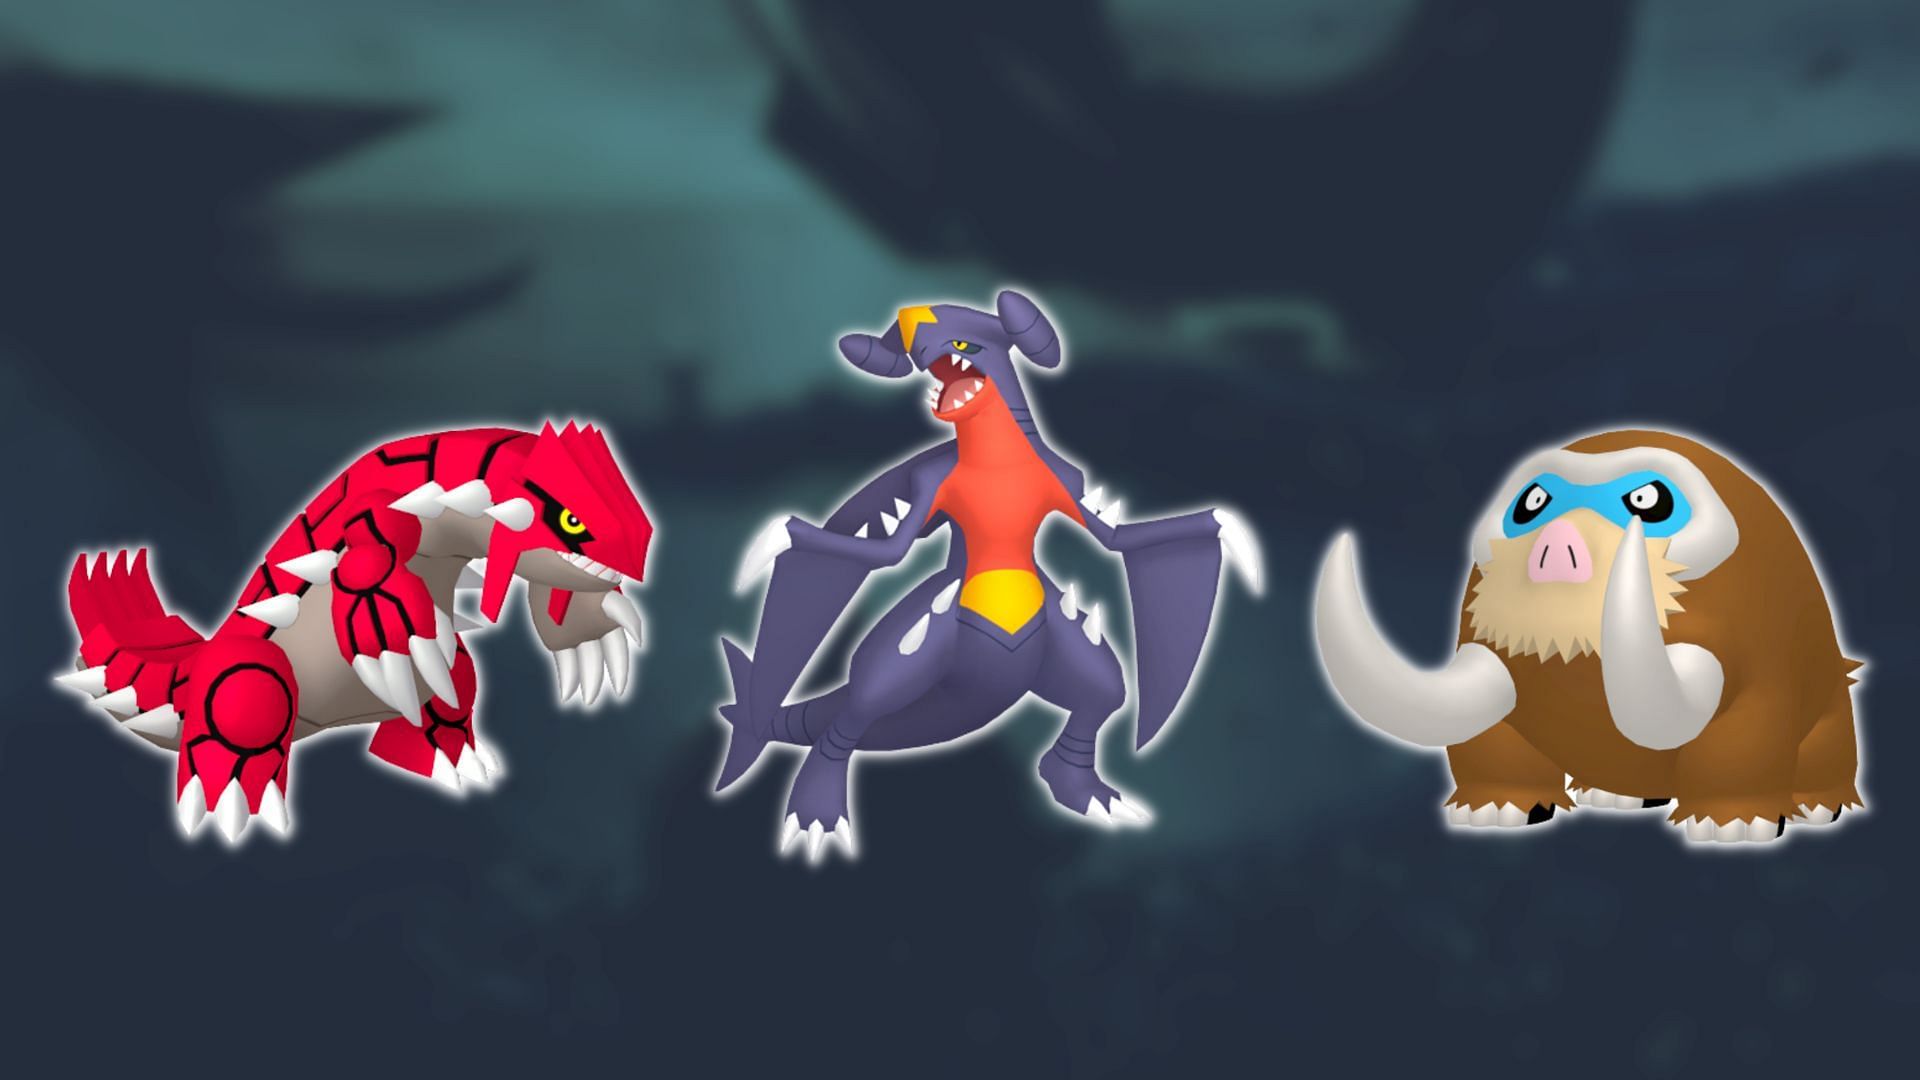 MEGA GENGAR RAID!! SHINY MEGA GENGAR EVOLUTION (Pokémon Go Halloween Event)  👻 